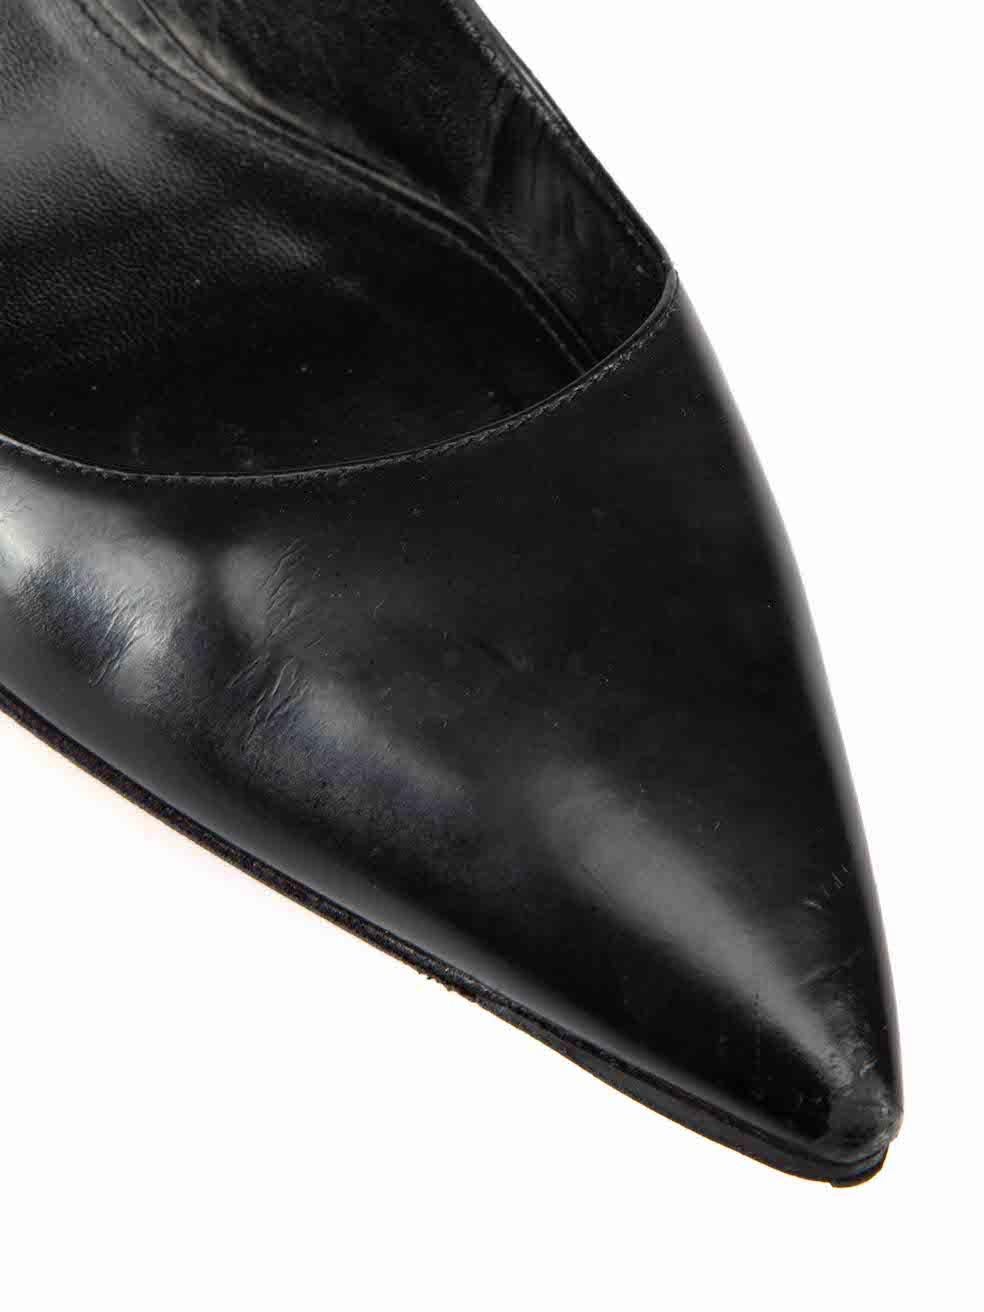 Prada Black Leather Point Toe Court Shoes Size IT 40.5 1